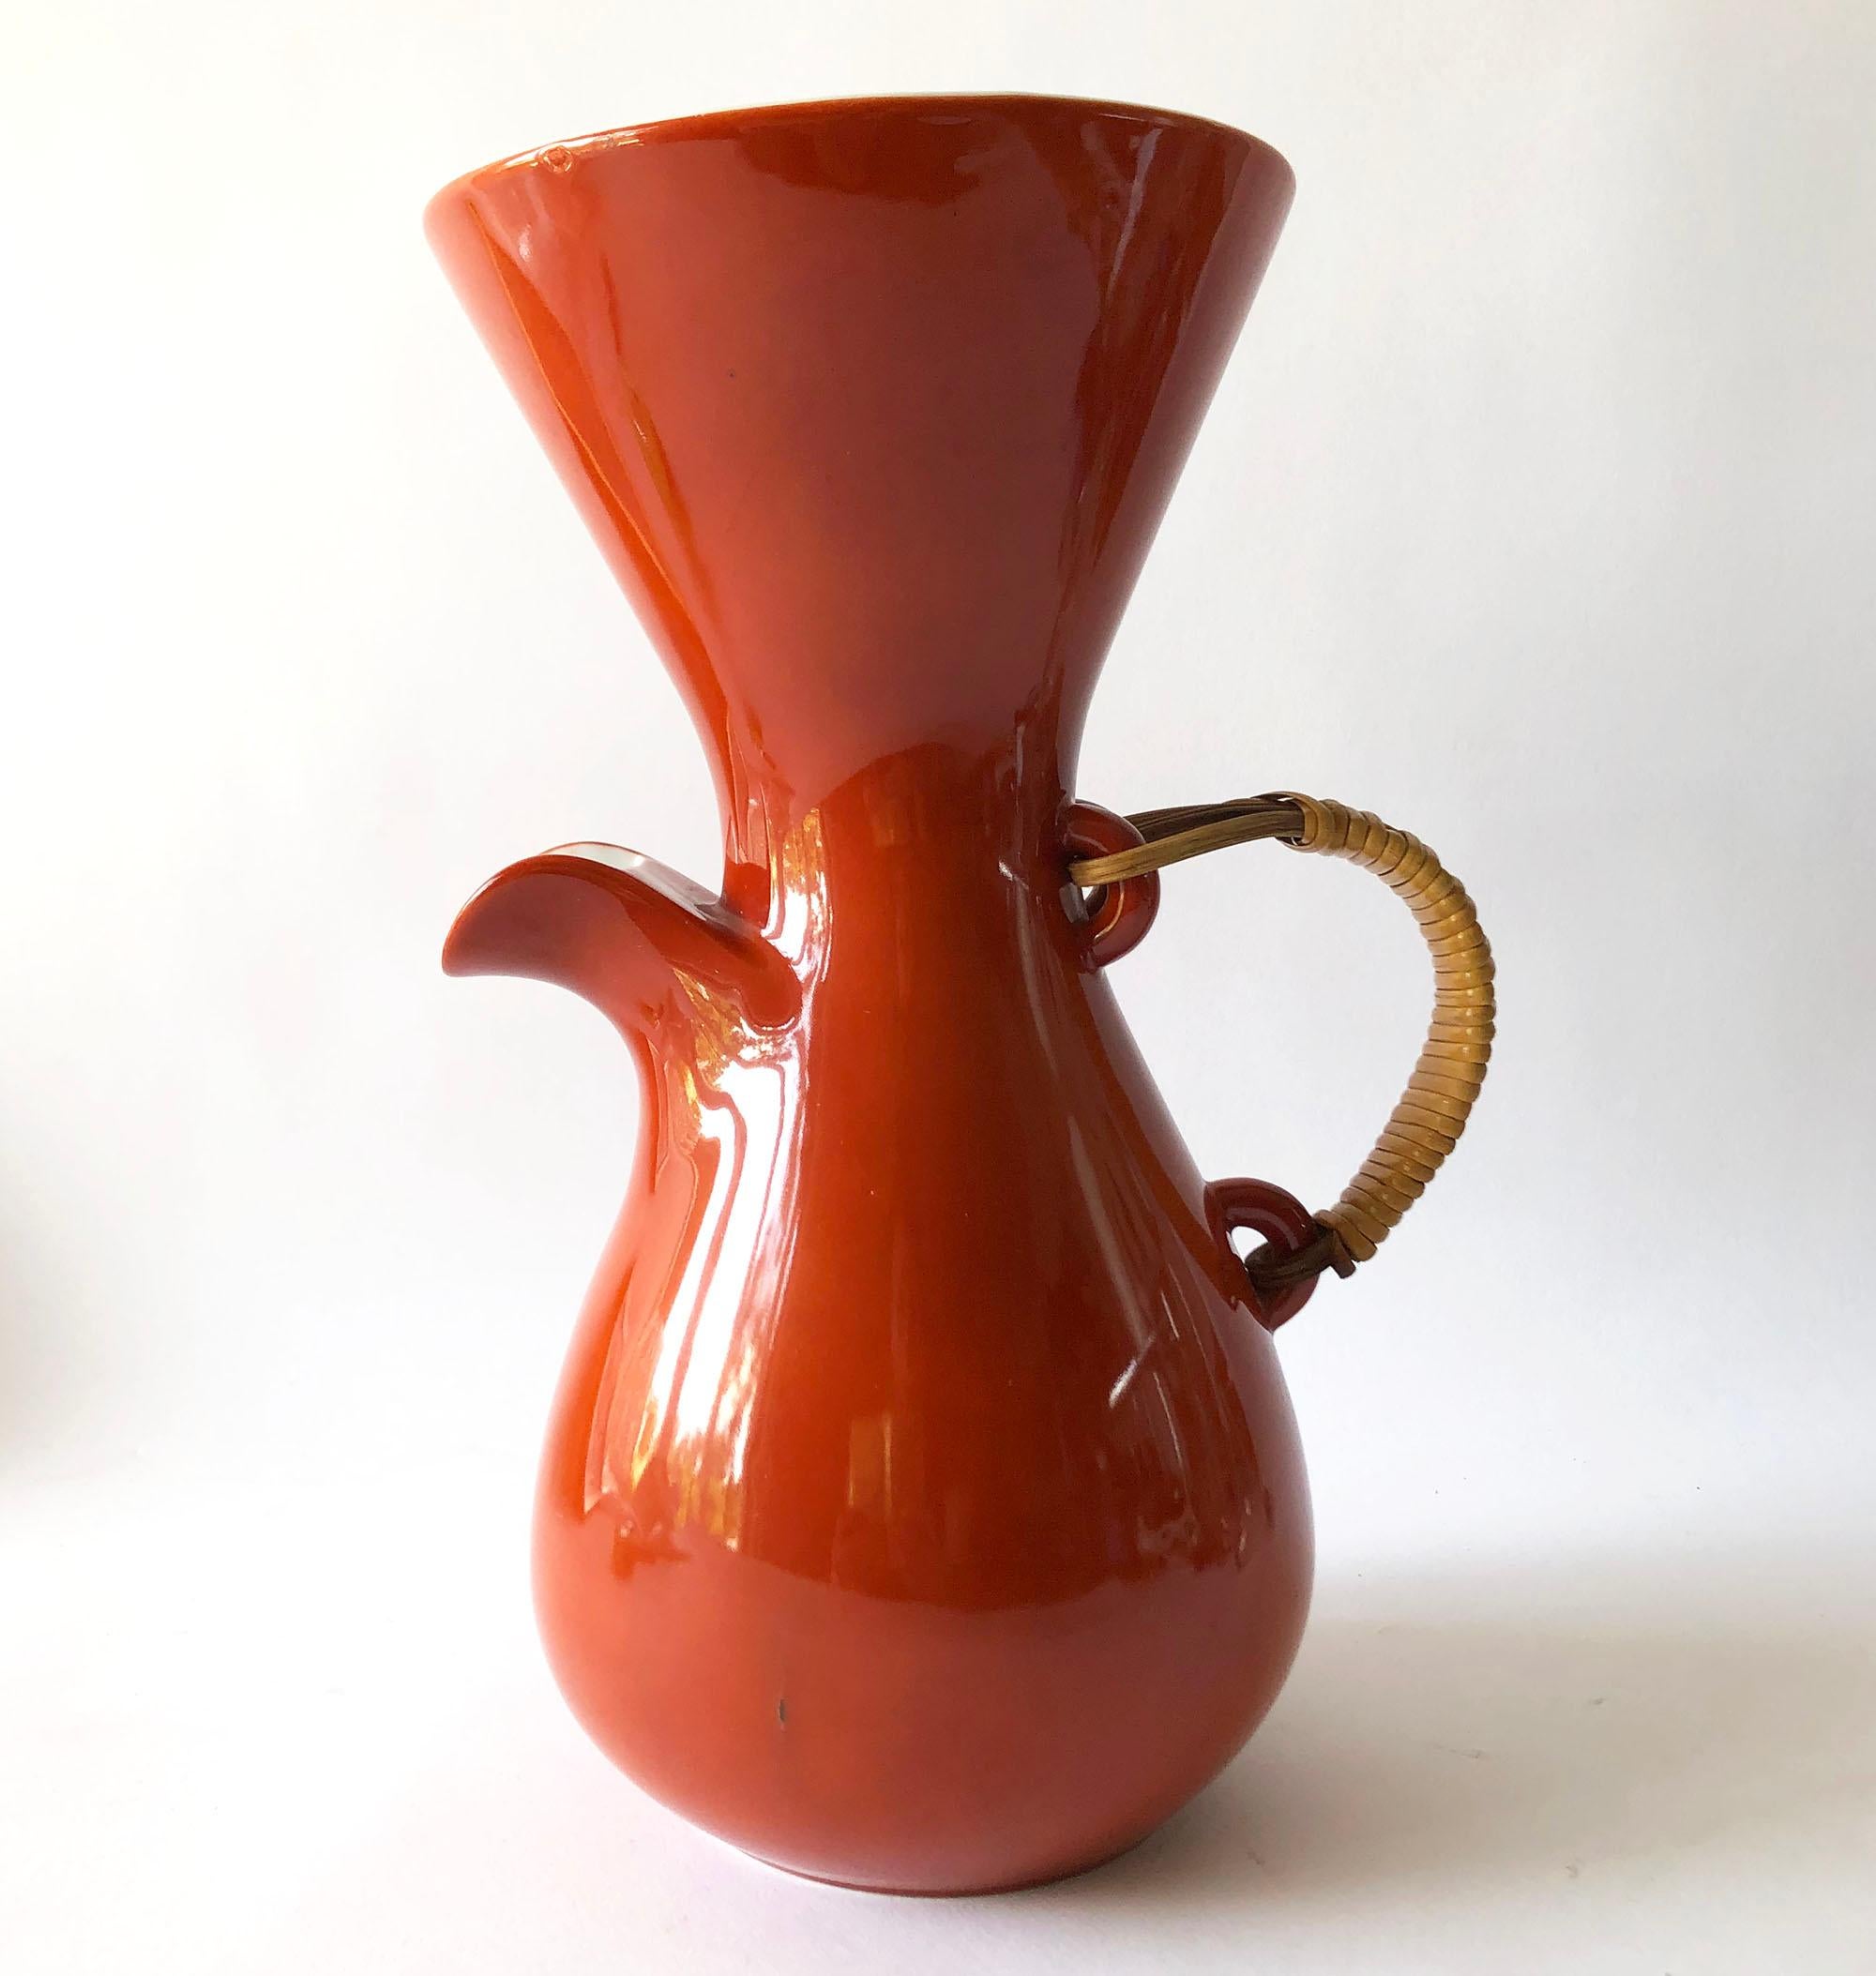 Ceramic coffee pot or pitcher with raffia handle designed by Kenji Fujita for Freeman Lederman. Pitcher measures 11.5